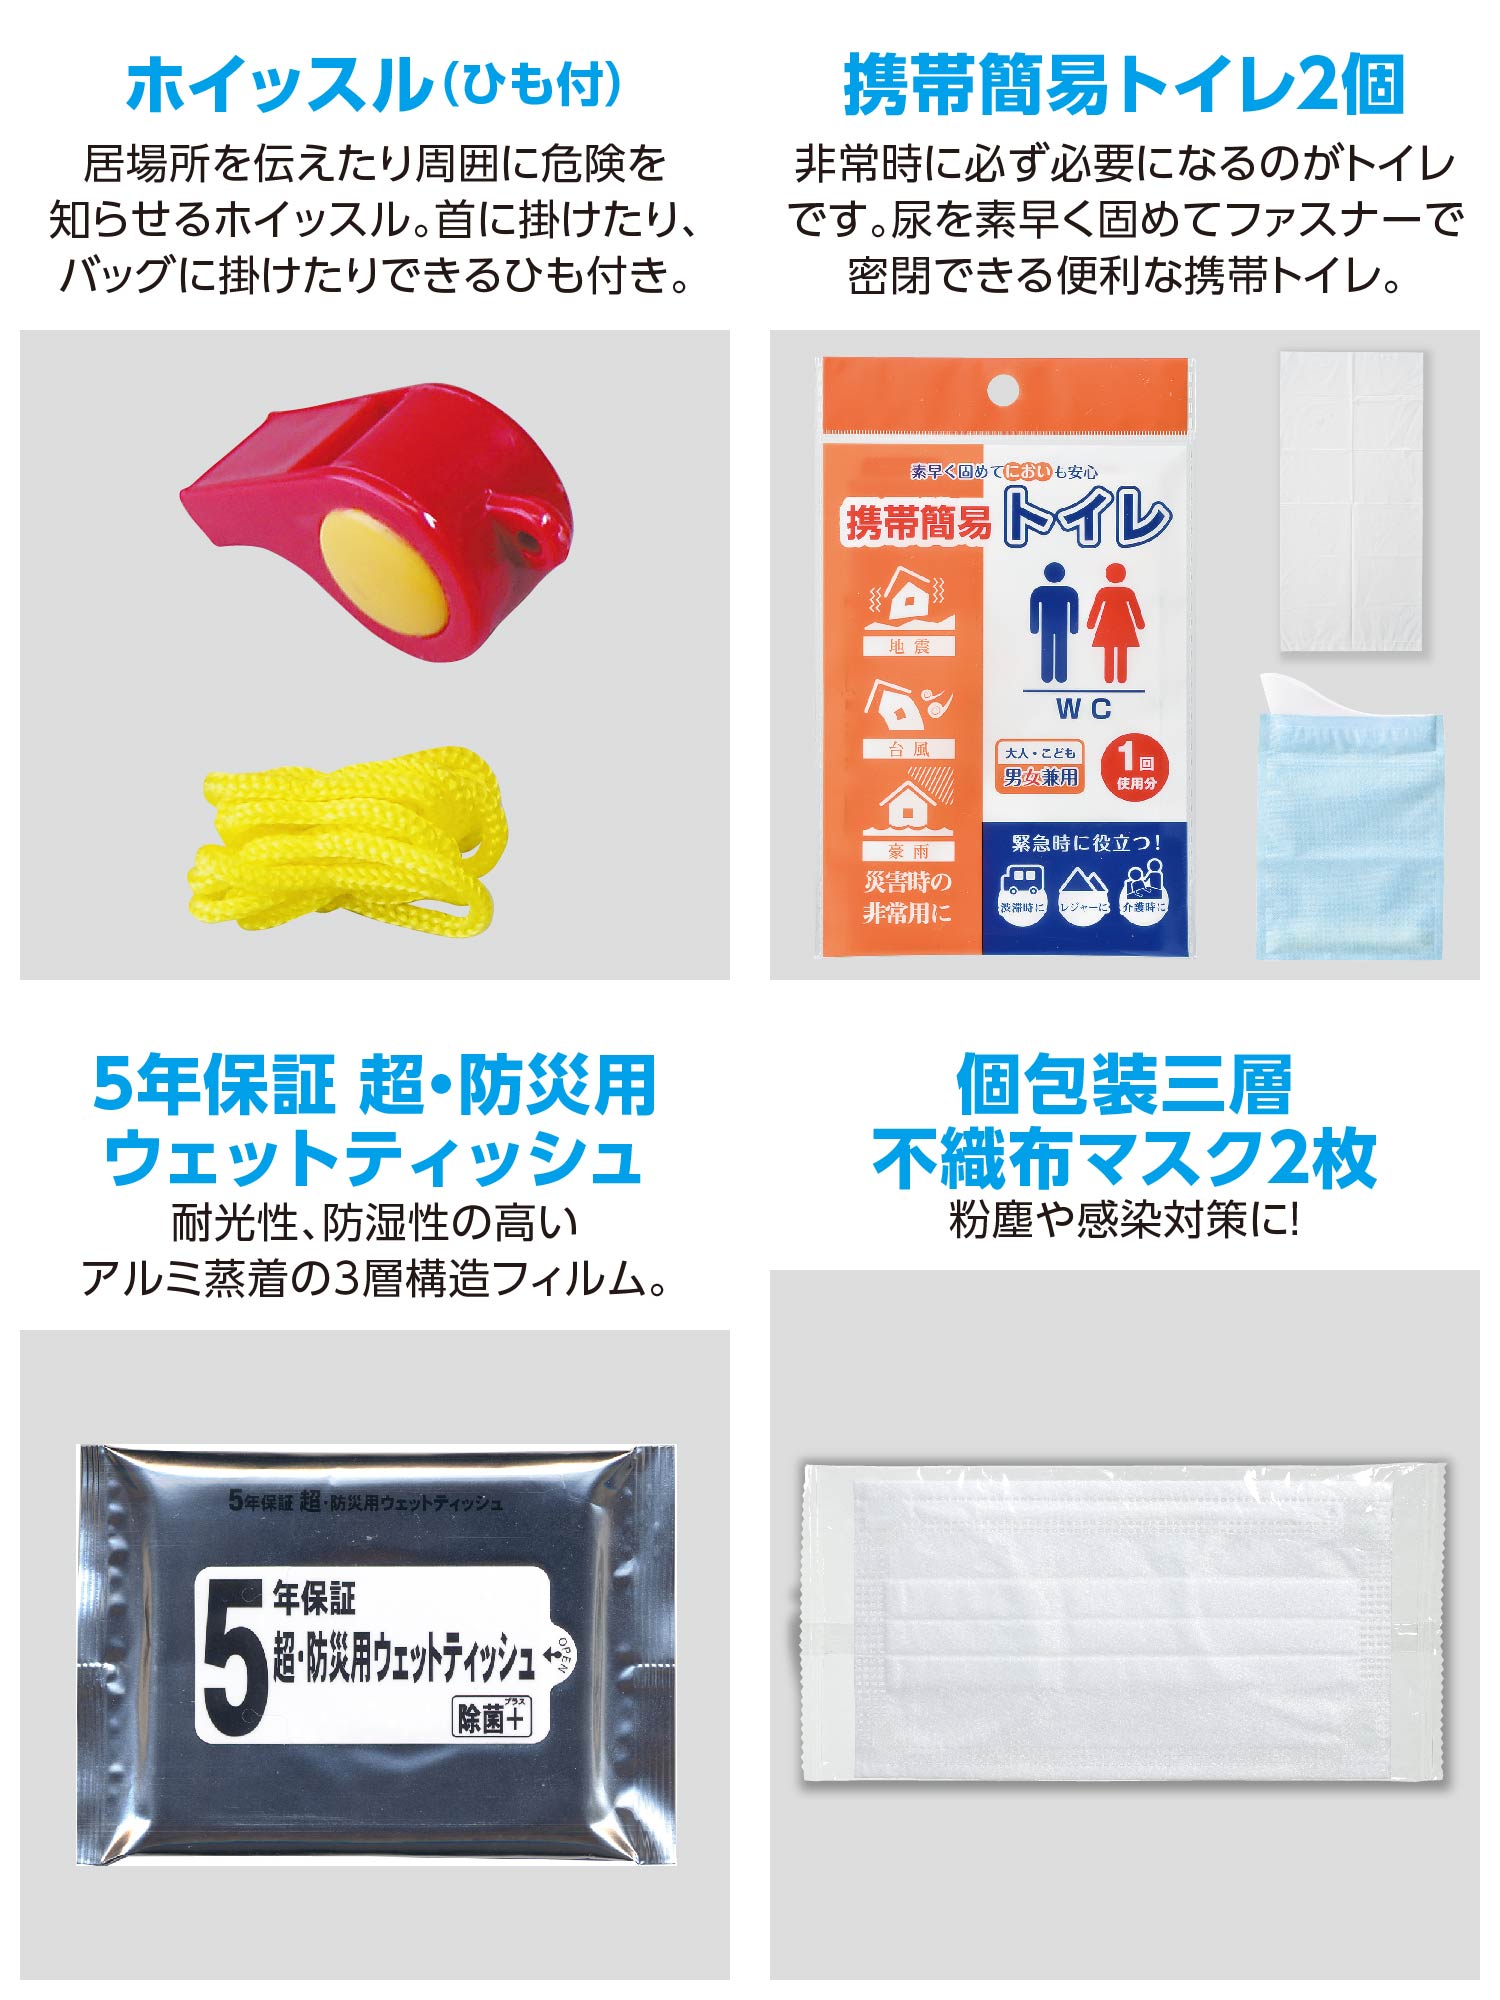 シャープ 除加湿空気清浄機 KI-PD50 | Costco Japan